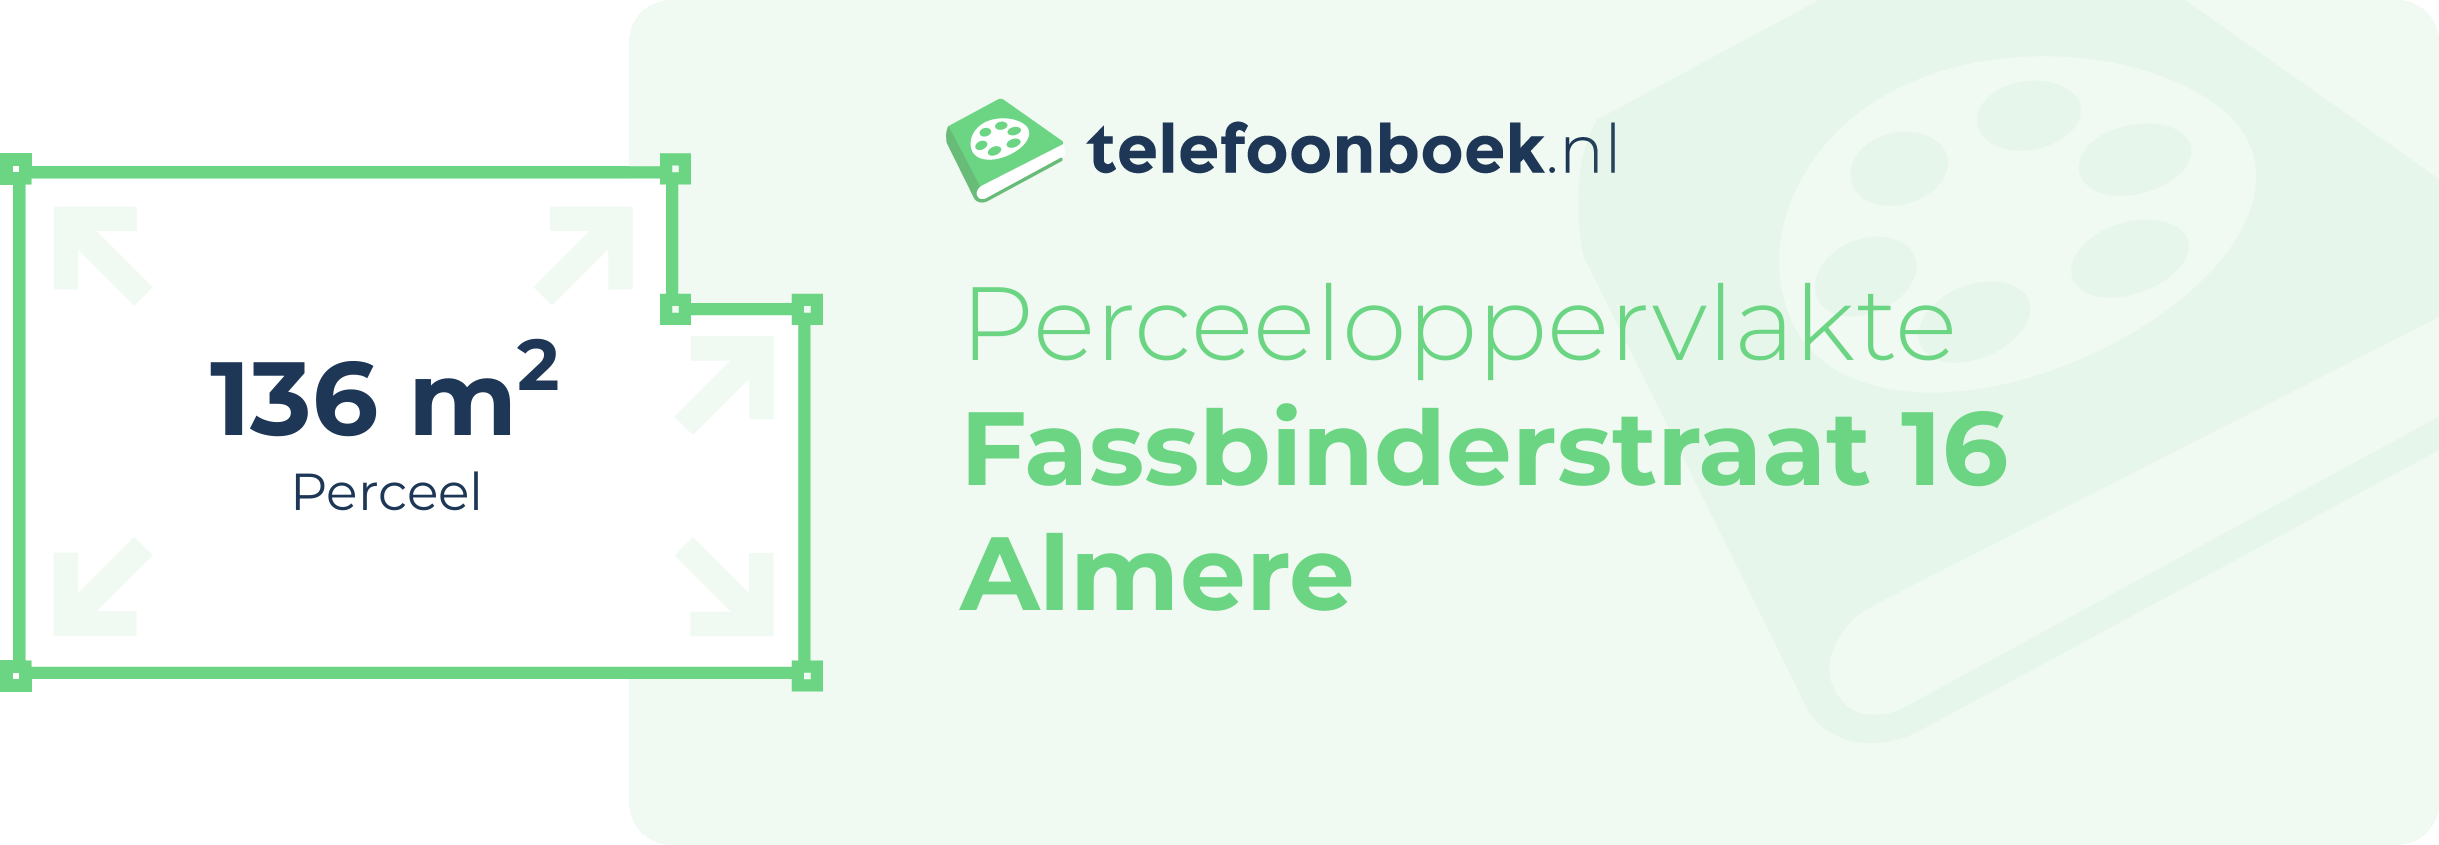 Perceeloppervlakte Fassbinderstraat 16 Almere